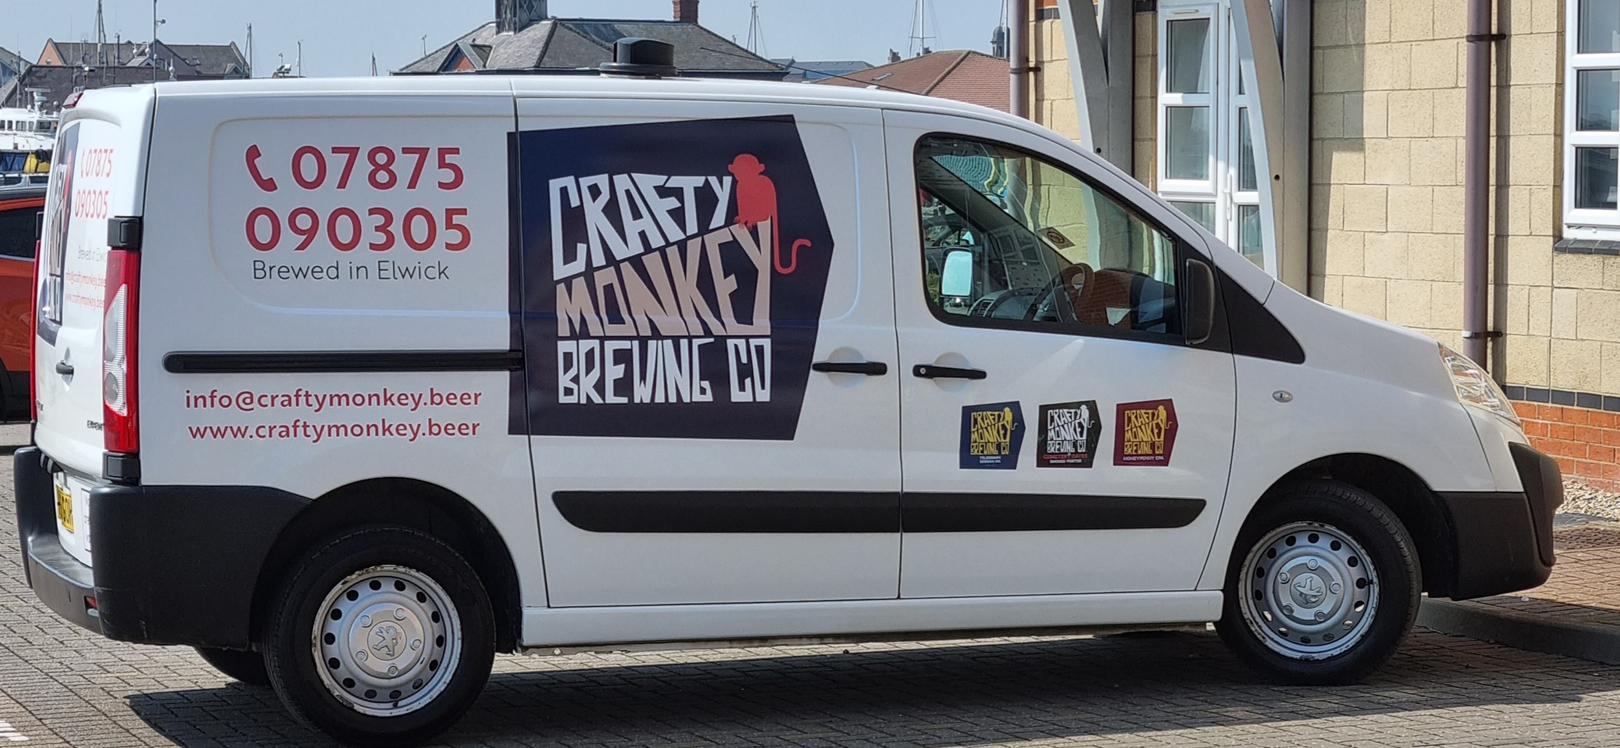 A van with Crafty Monkey Brewery logo on